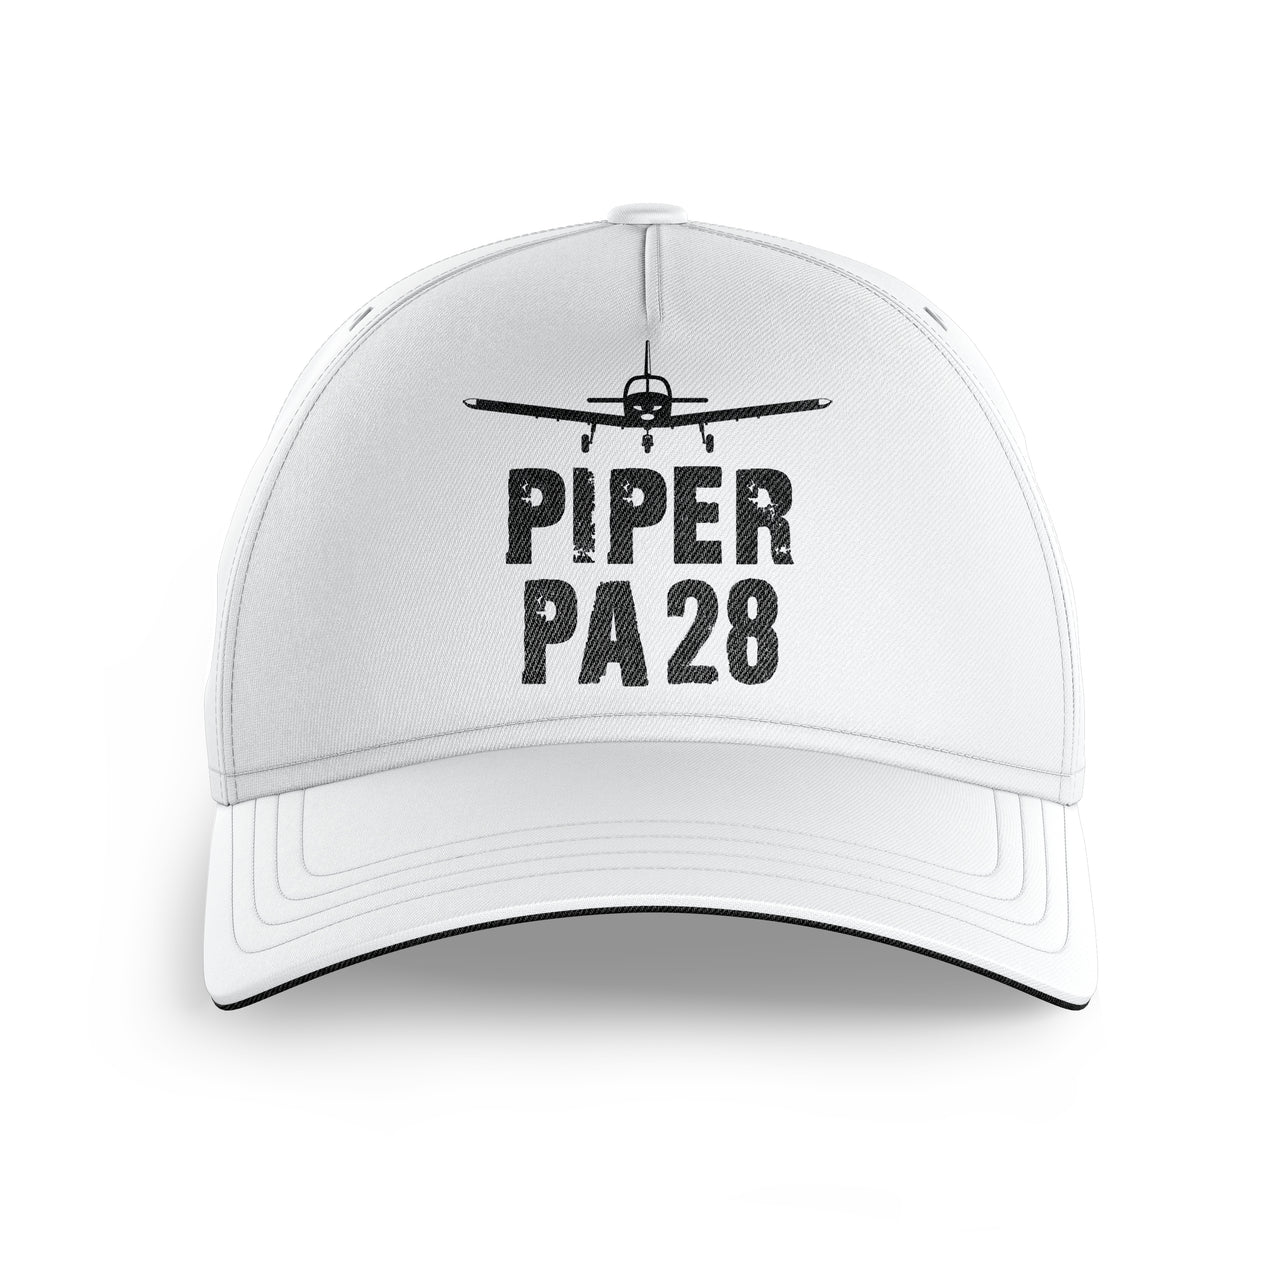 Piper PA28 & Plane Printed Hats